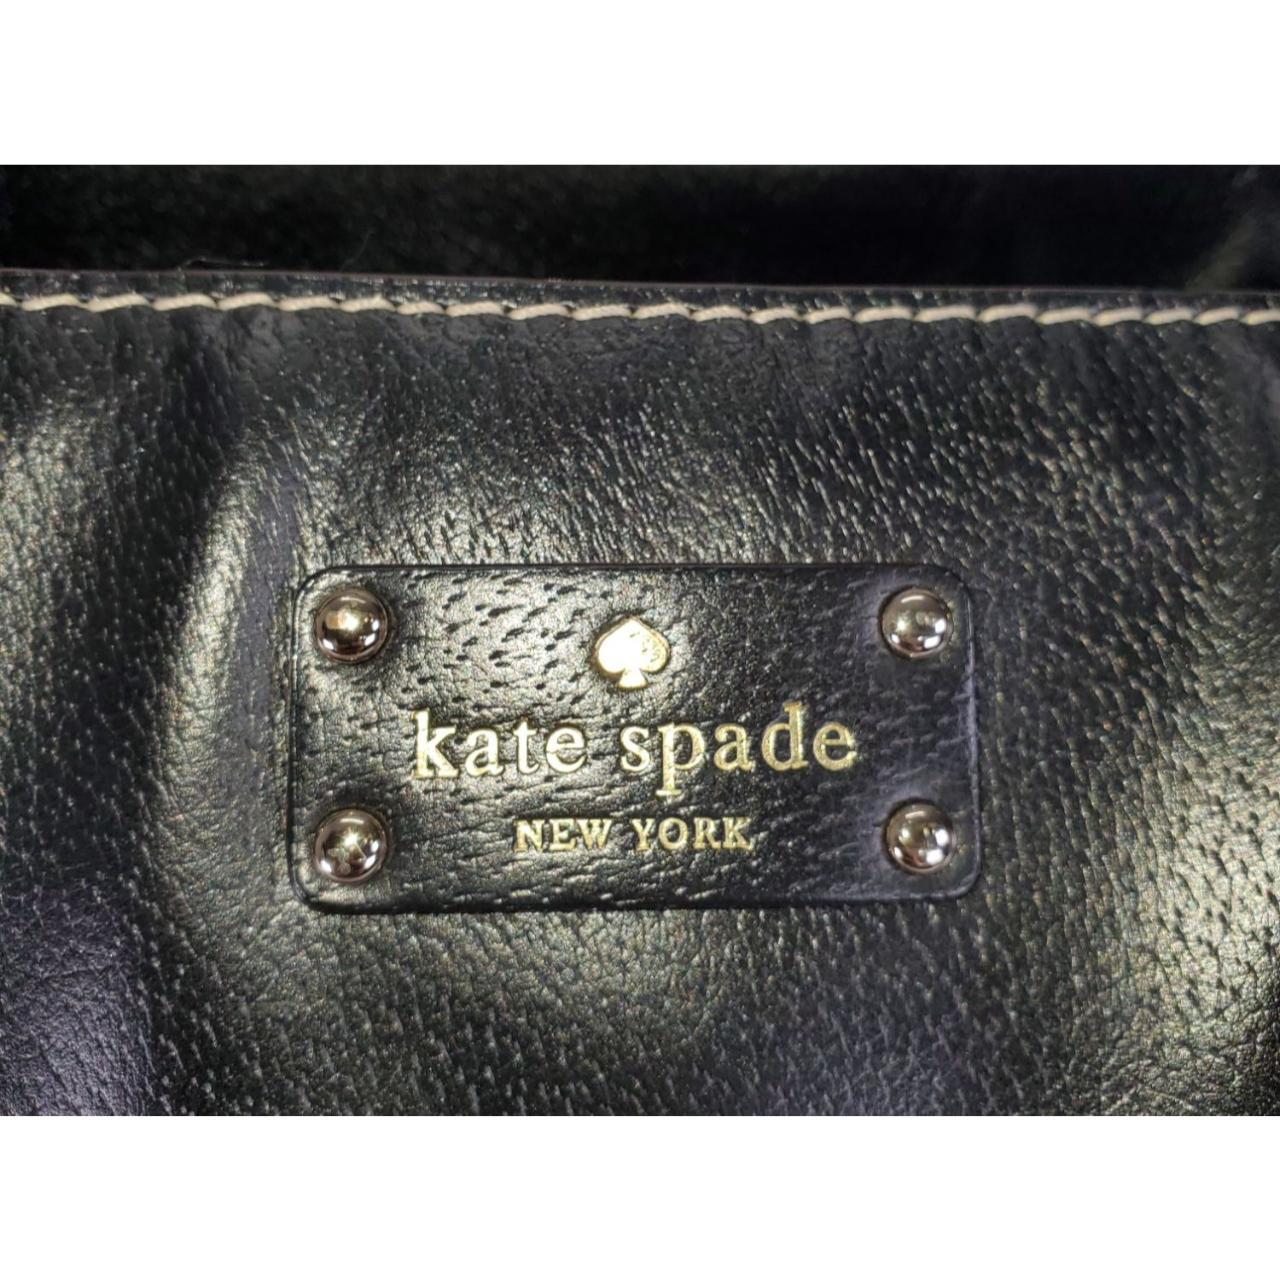 How to Spot a Fake Kate Spade Purse